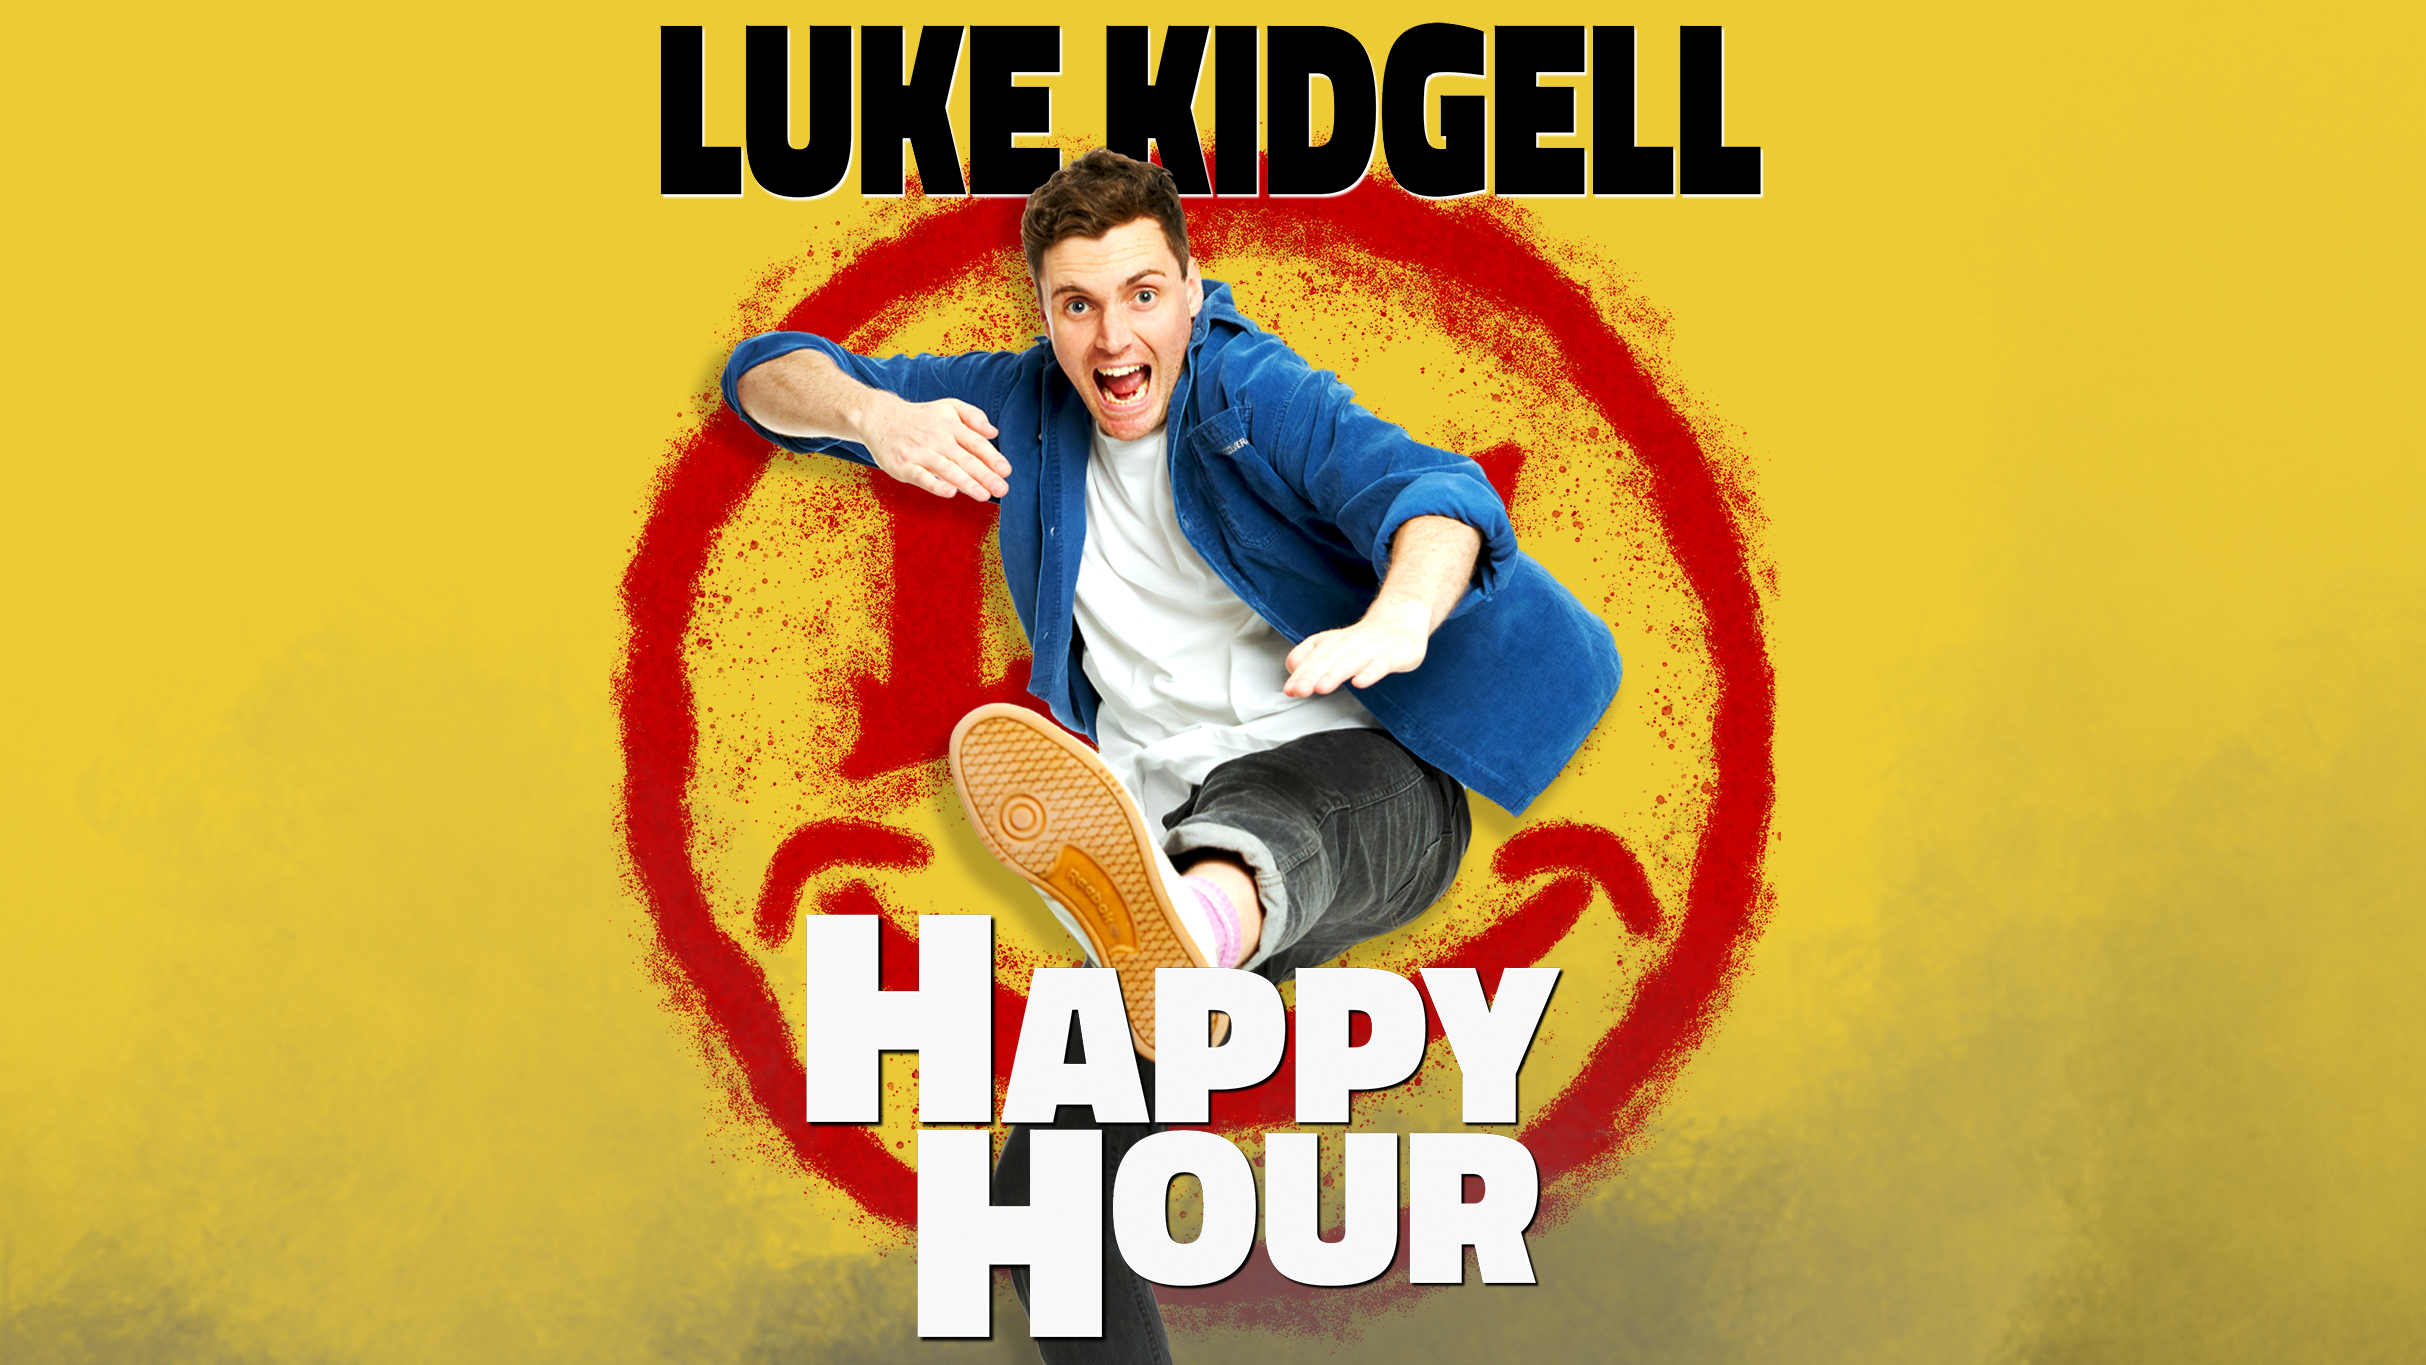 Luke Kidgell - Happy Hour Tour Event Title Pic